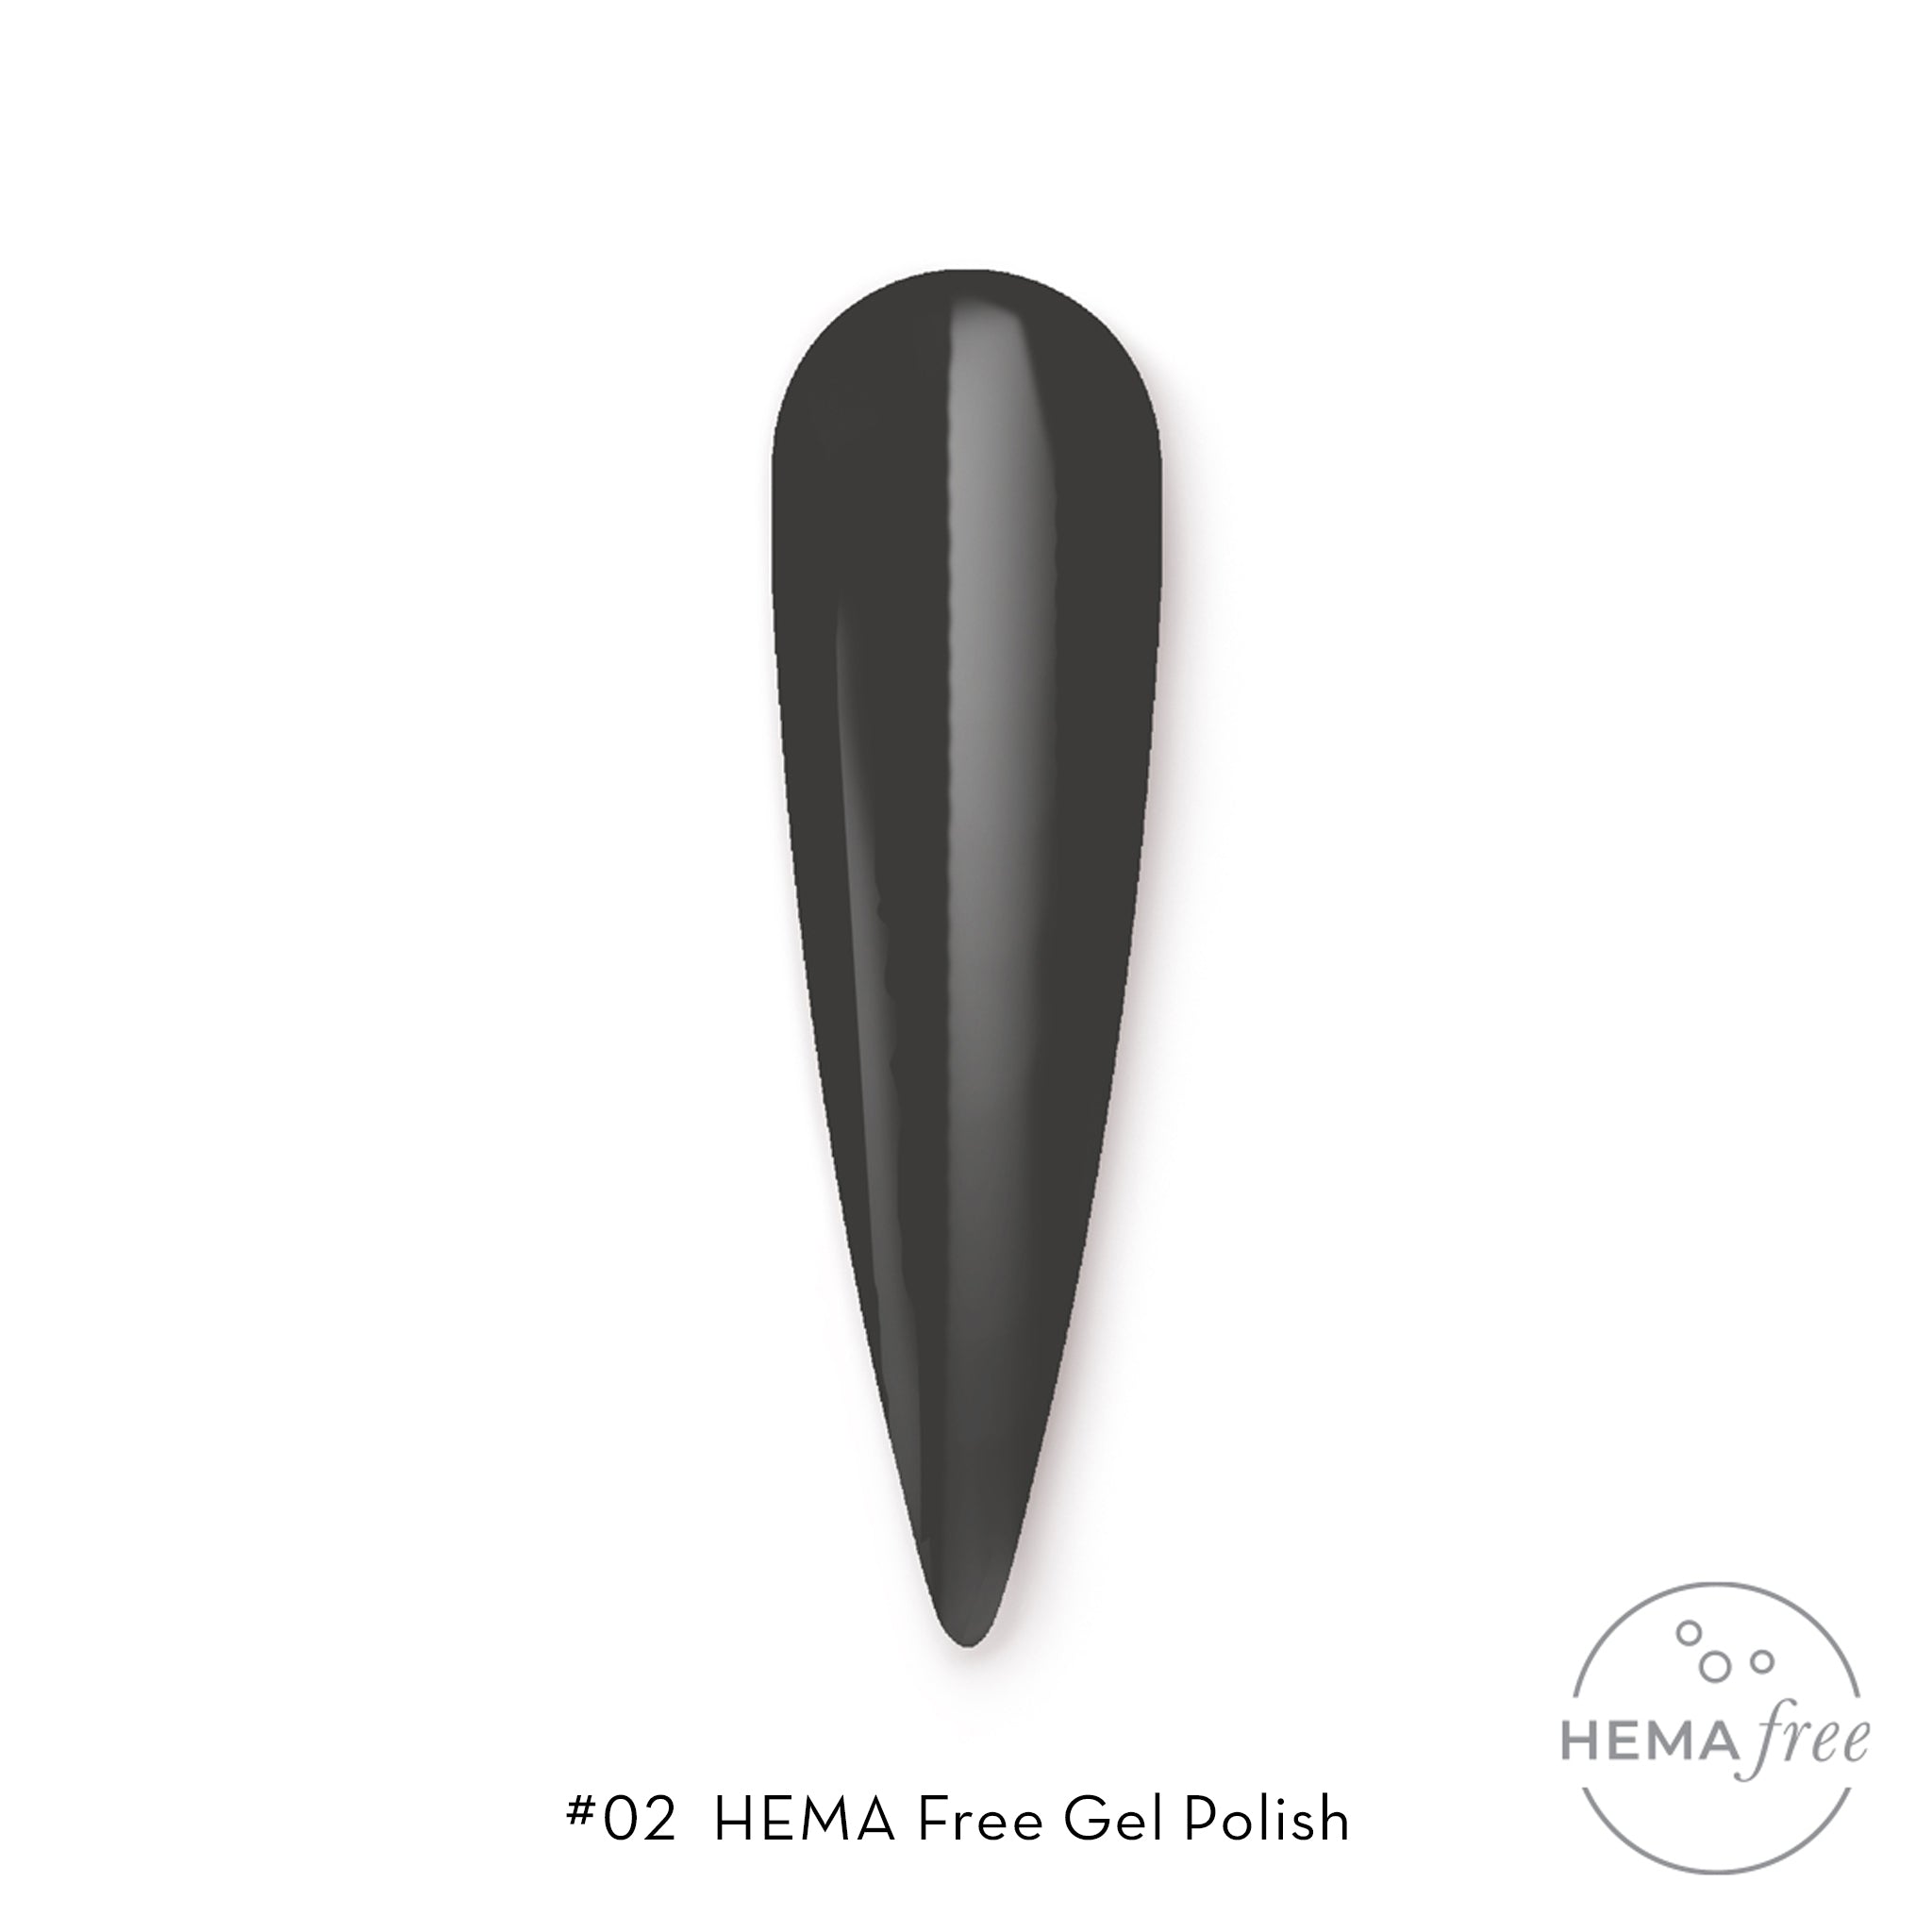 HEMA Free Gel Polish | Fortify by Fuzion | Colour 02